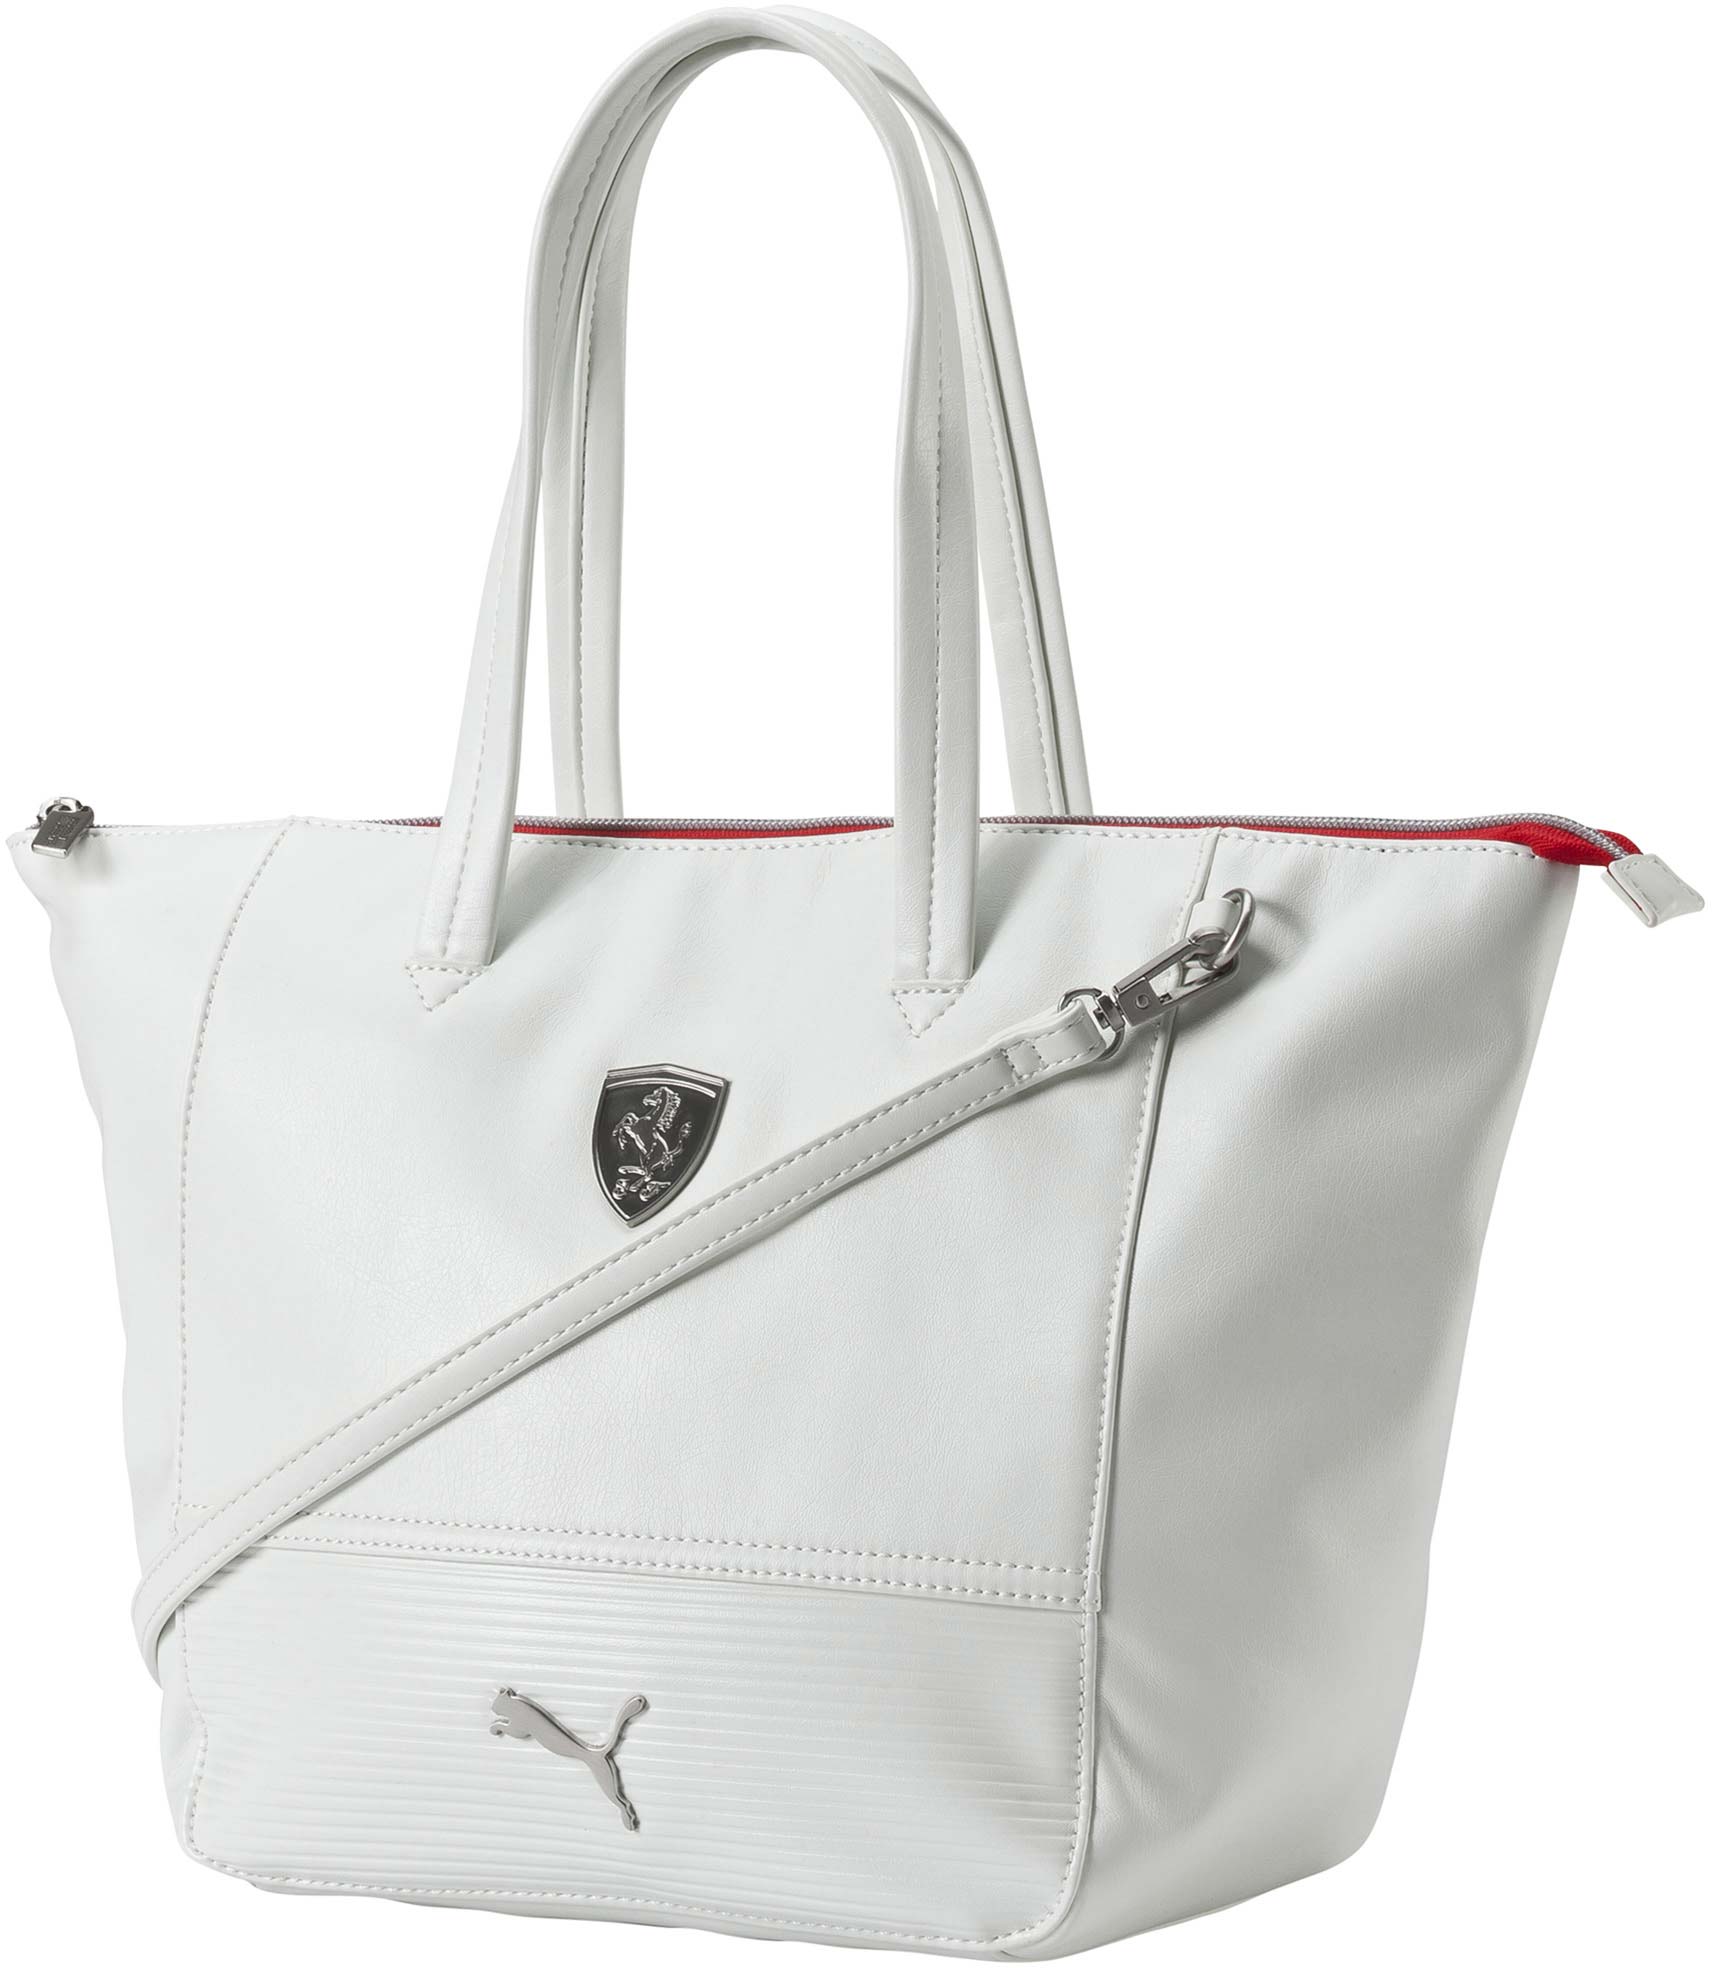 FERRARI LS HANDBAG - Women's Luxury Handbag